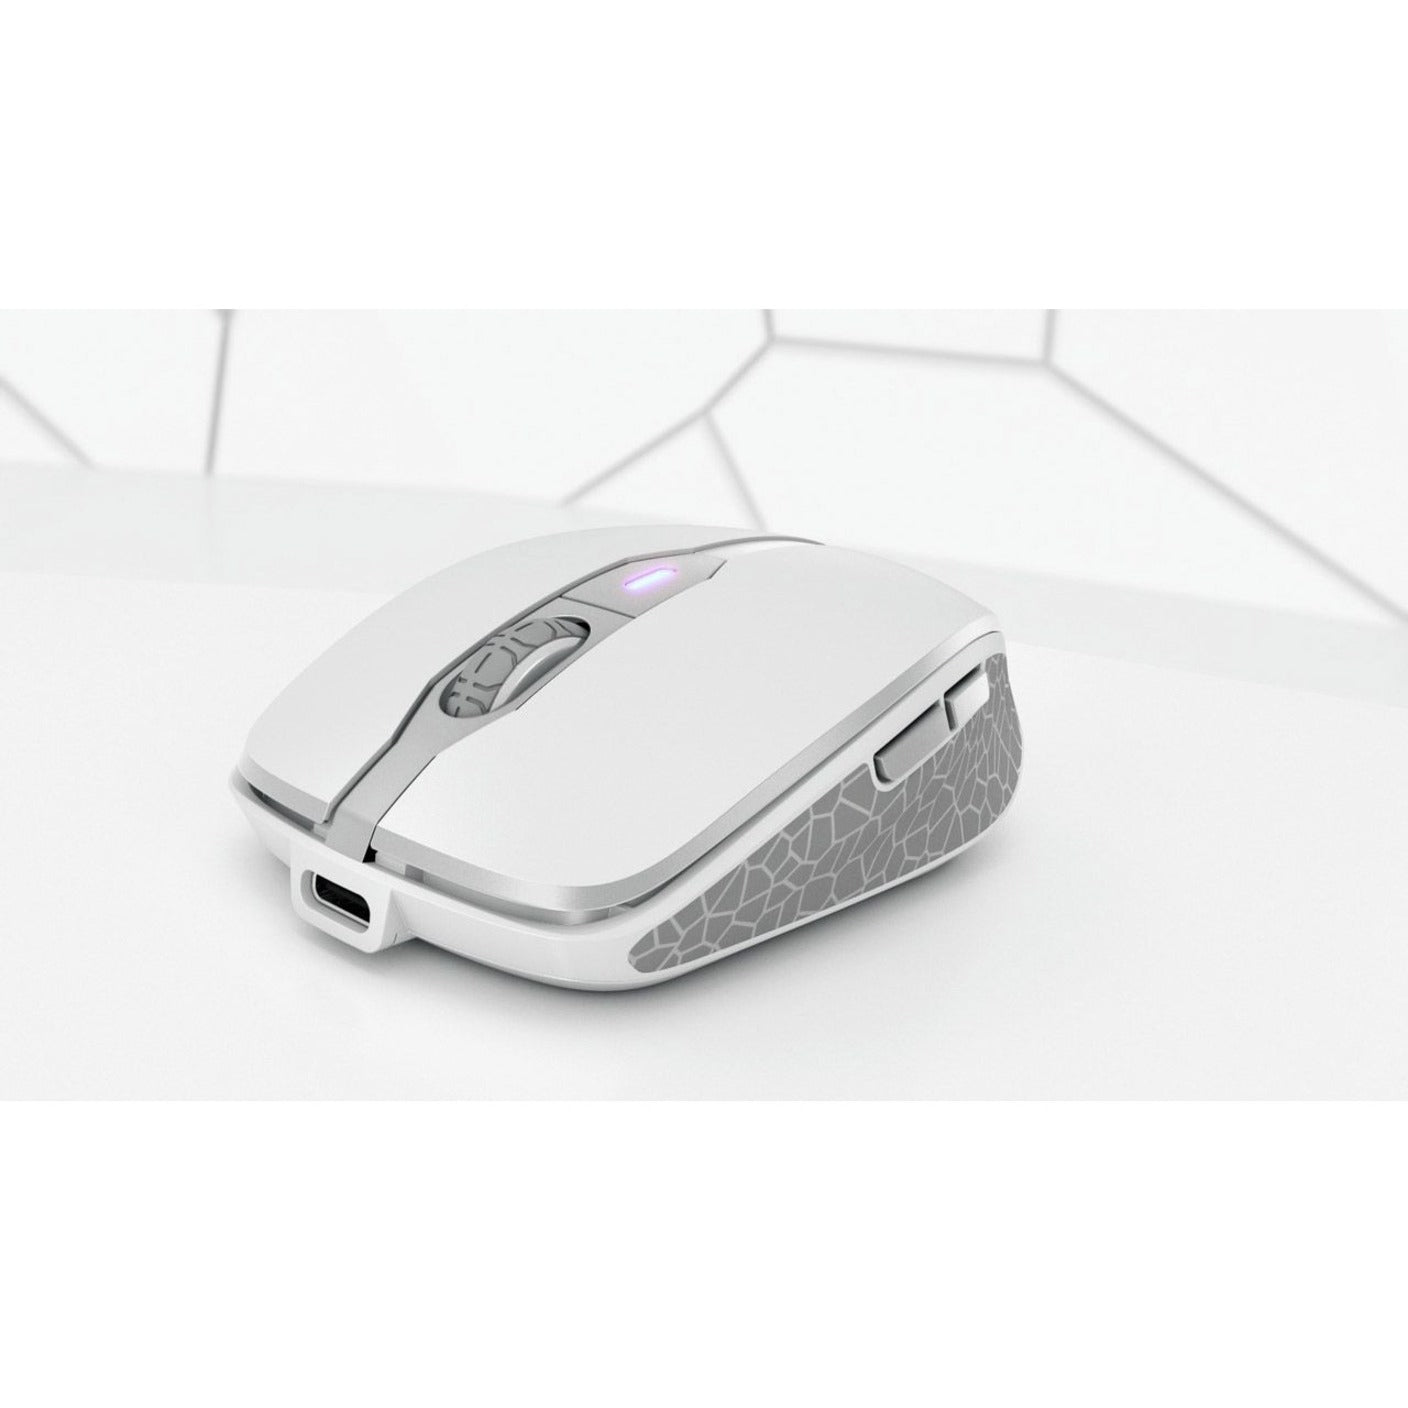 CHERRY JD-9100US-1 DW 9100 SLIM Rechargeable Wireless Desktop Keyboard & Mouse Combo, Silver/White, USB